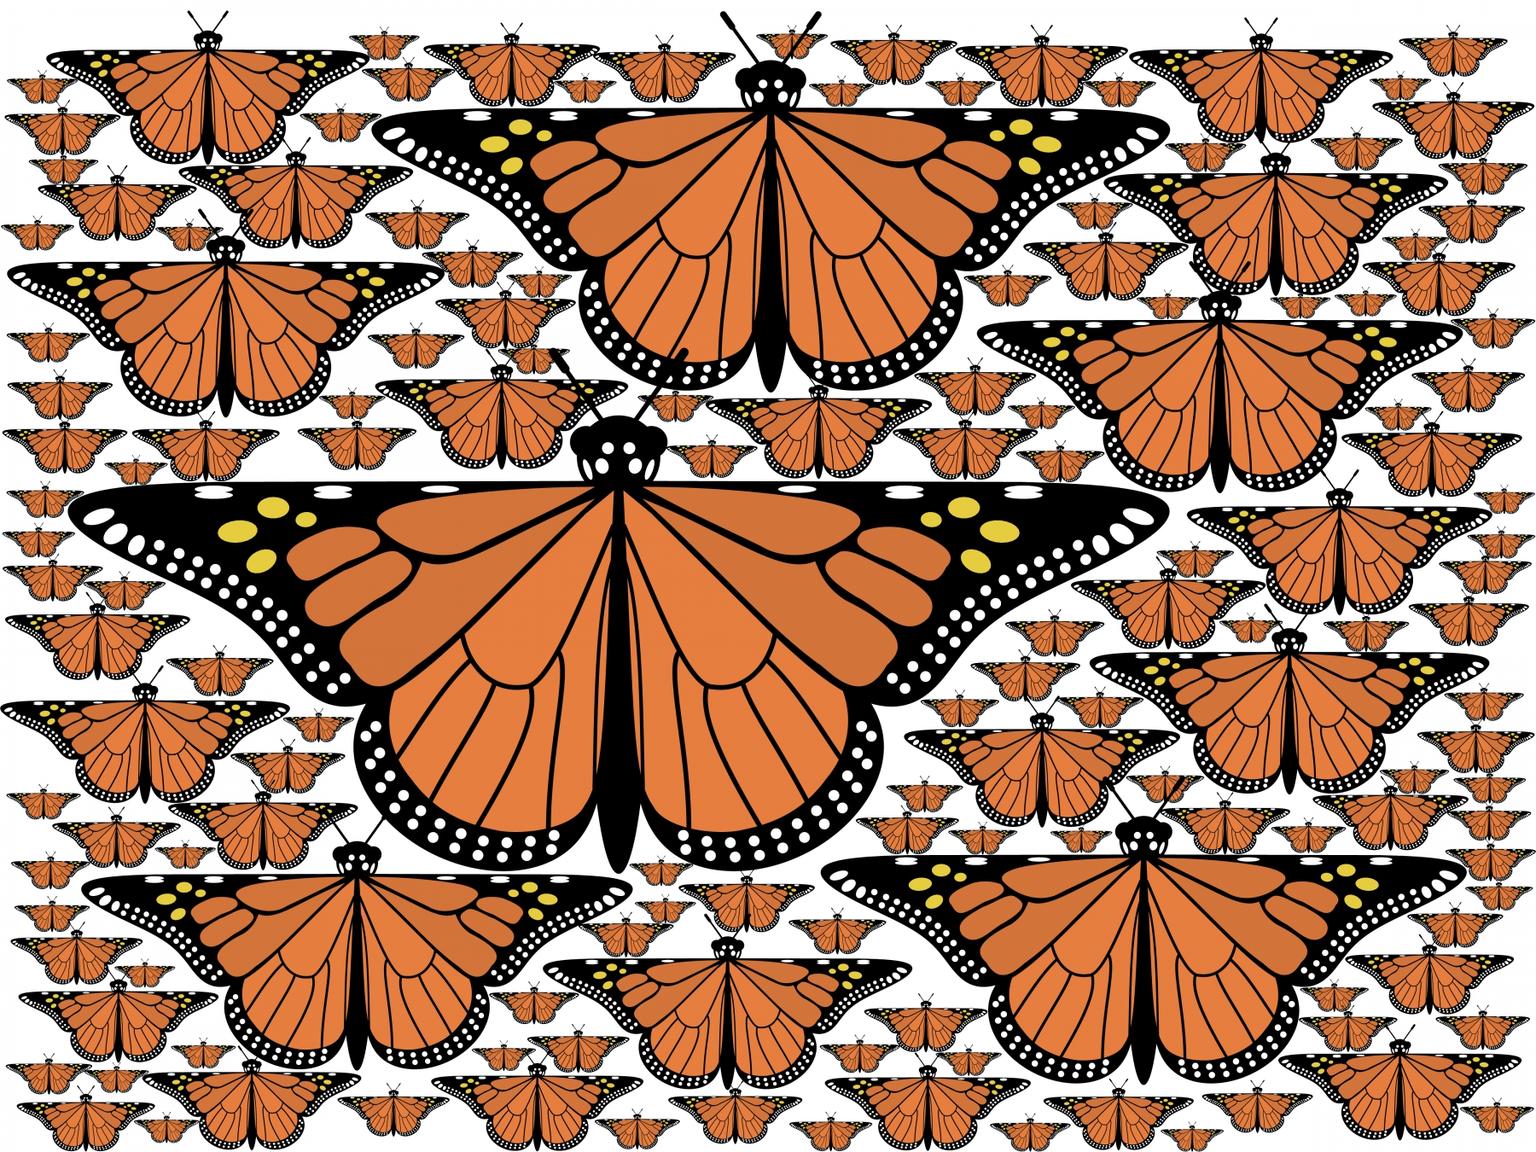 Image for entry 'Fractal Monarchs'